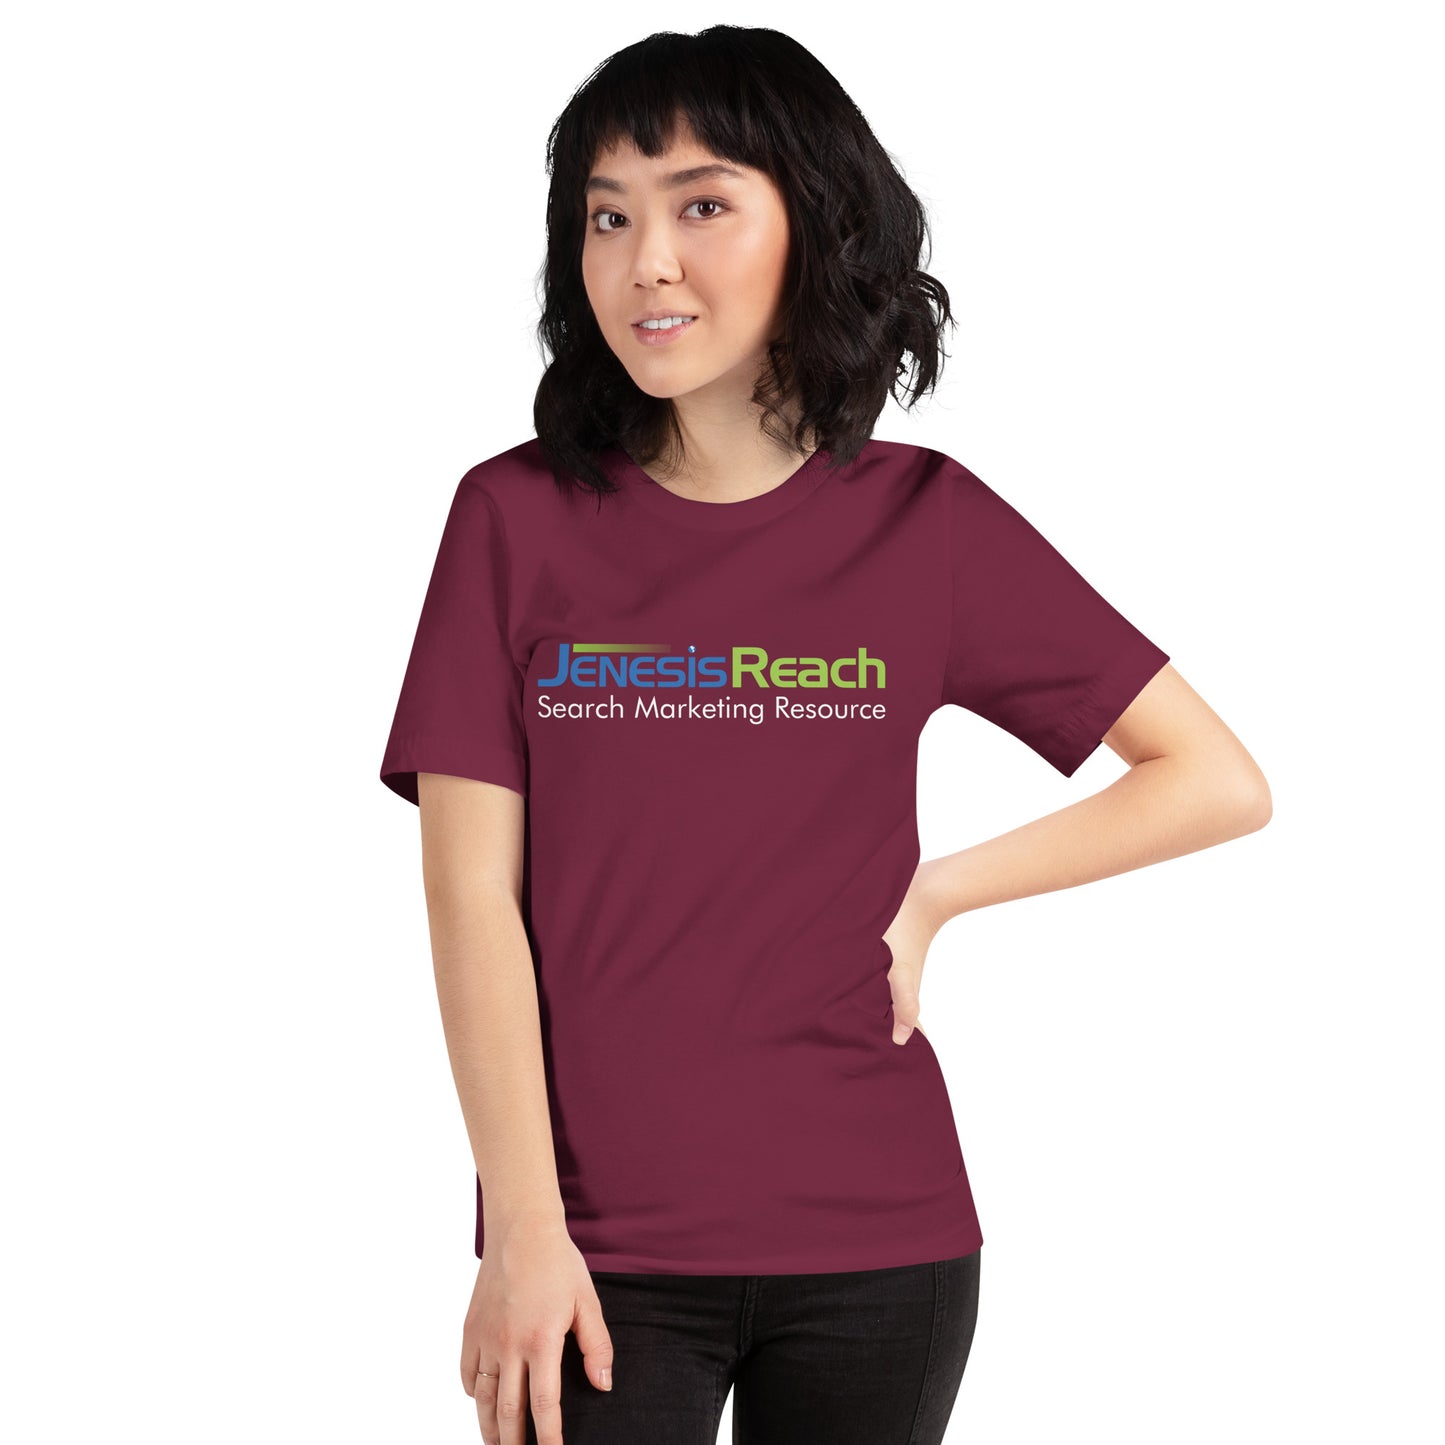 Jenesis Reach T-Shirt